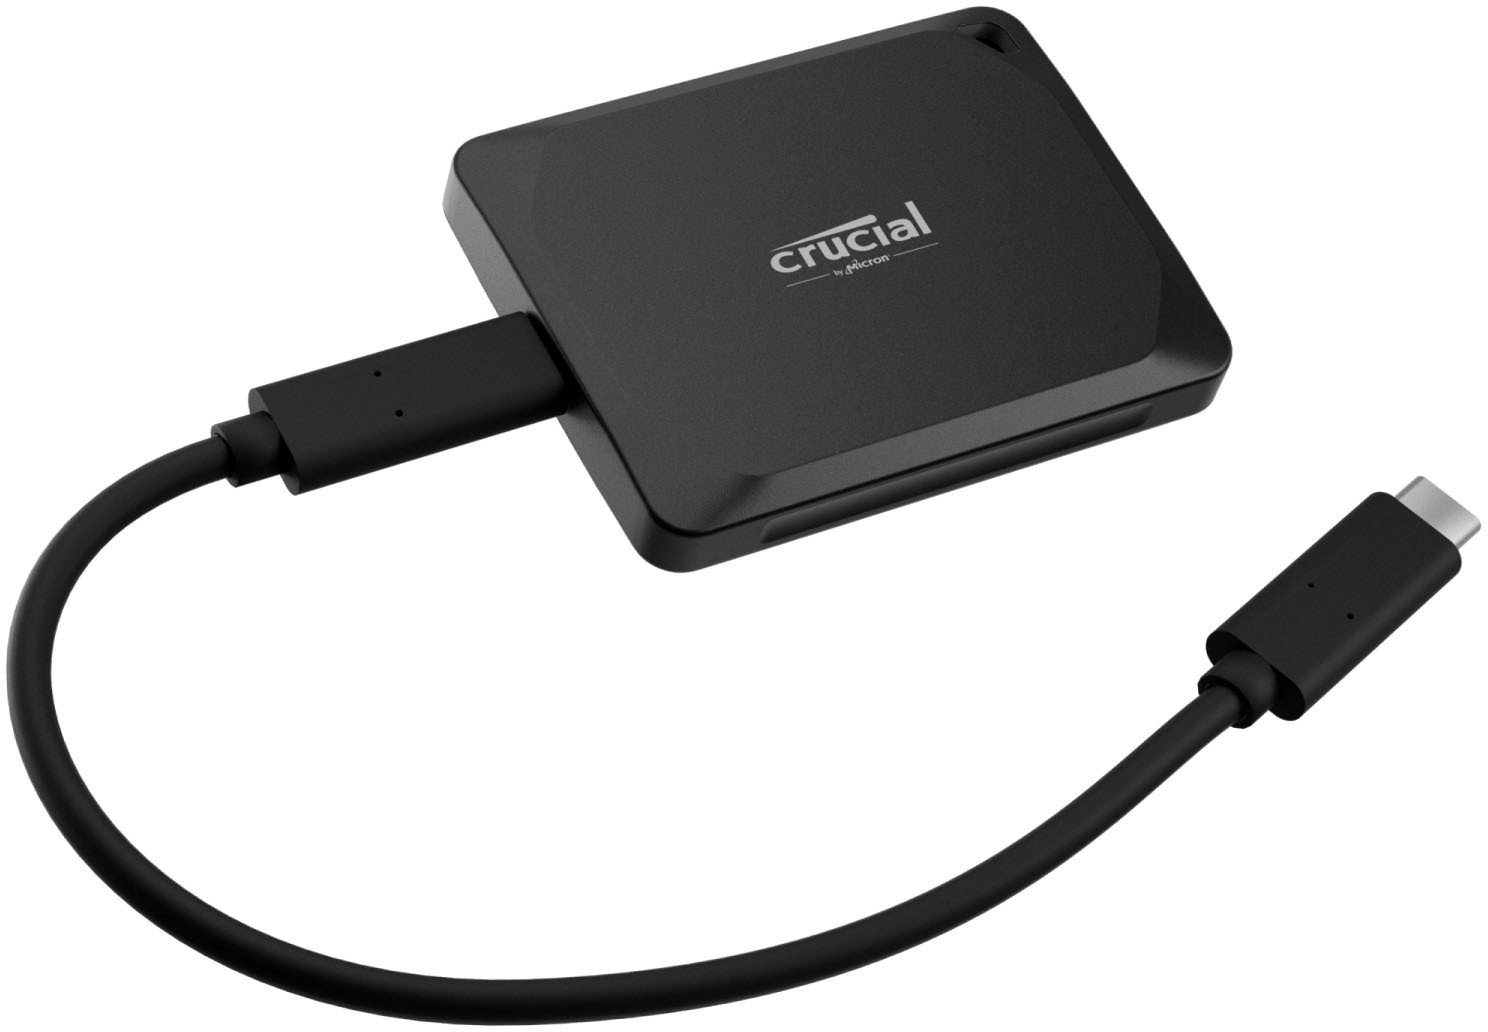 Crucial 4TB X9 Pro USB 3.2 Gen 2 Portable SSD CT4000X9PROSSD9